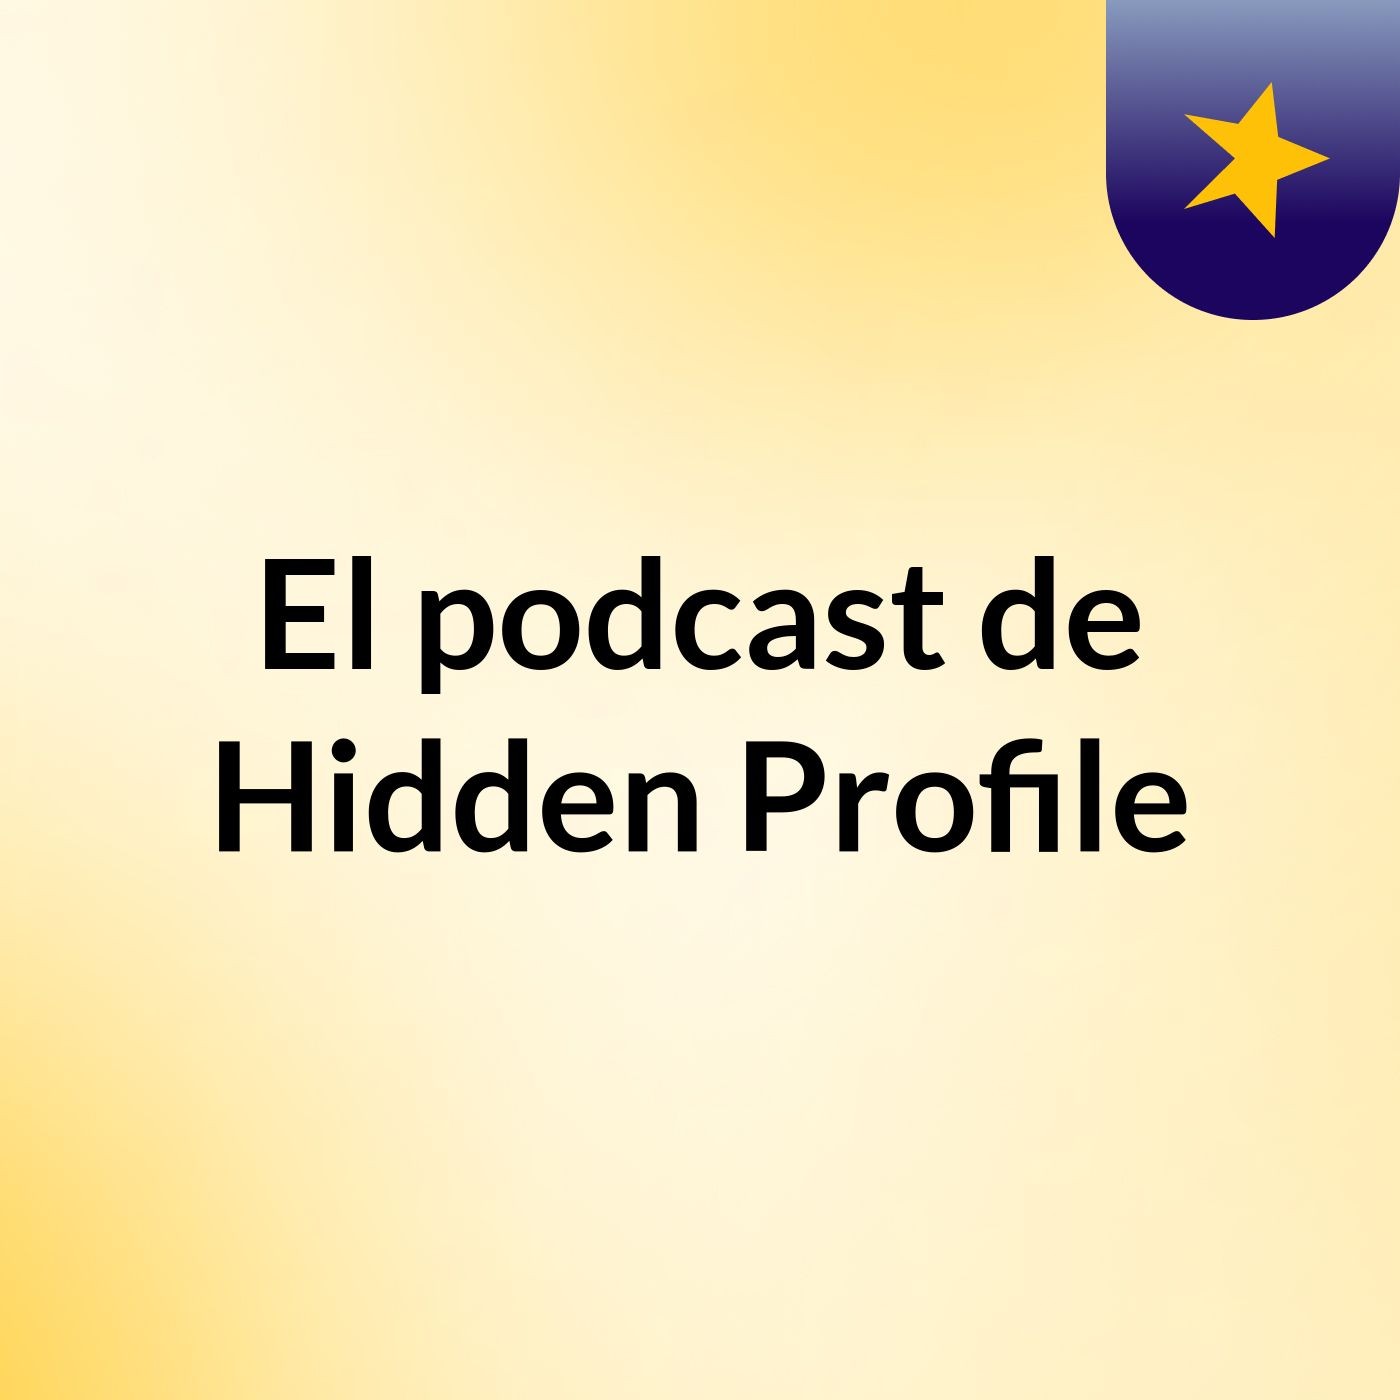 El podcast de Hidden Profile